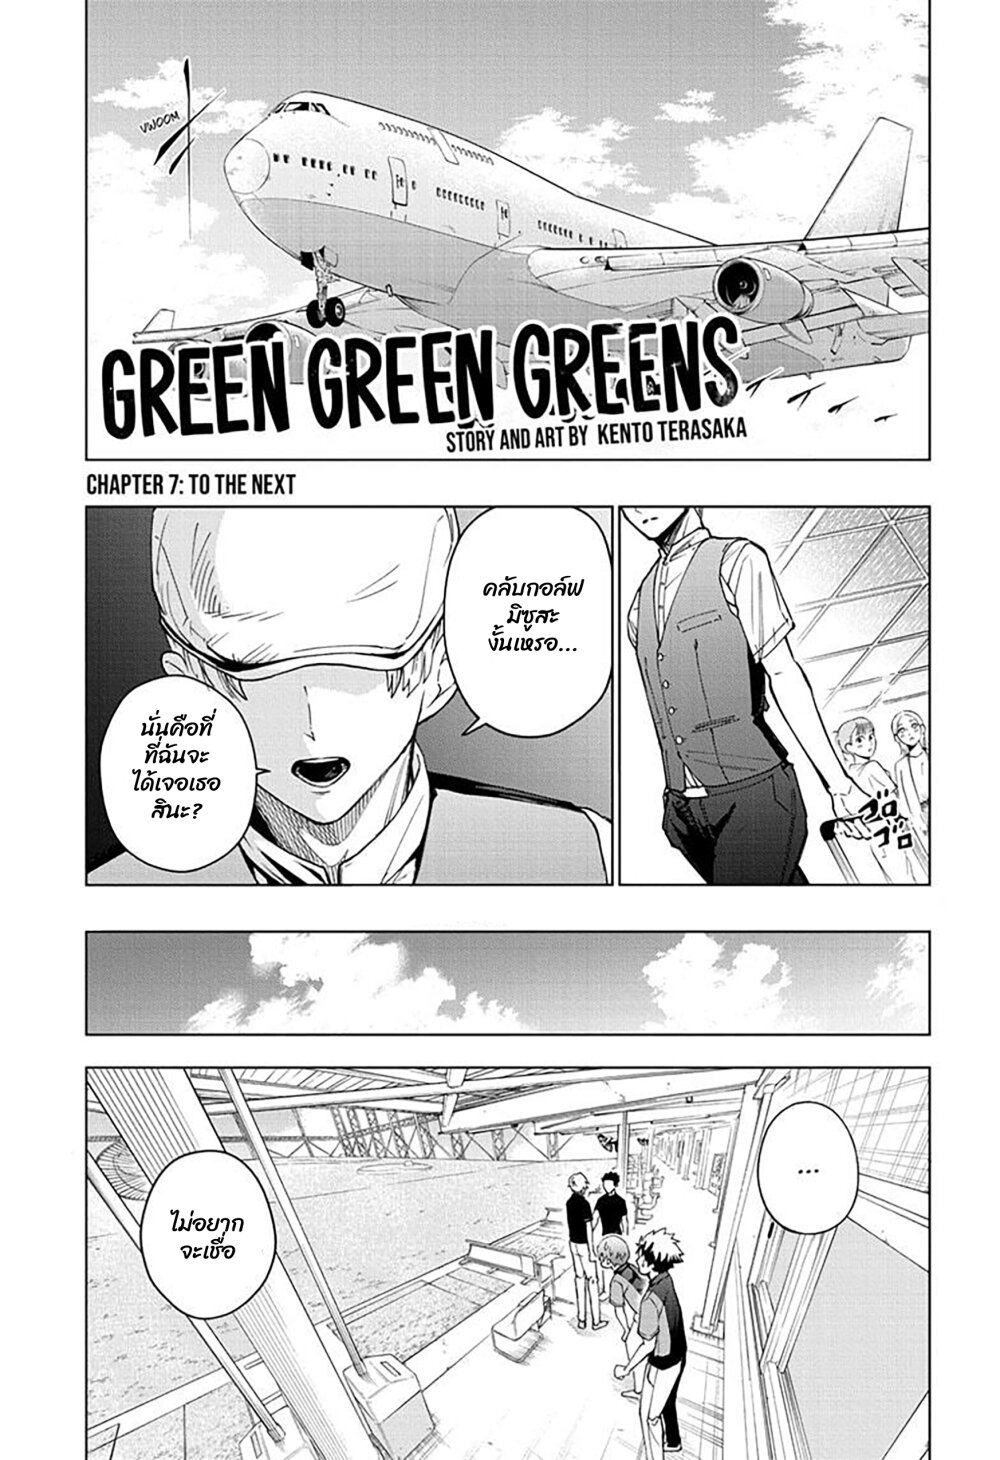 Green Green Greens 7 01